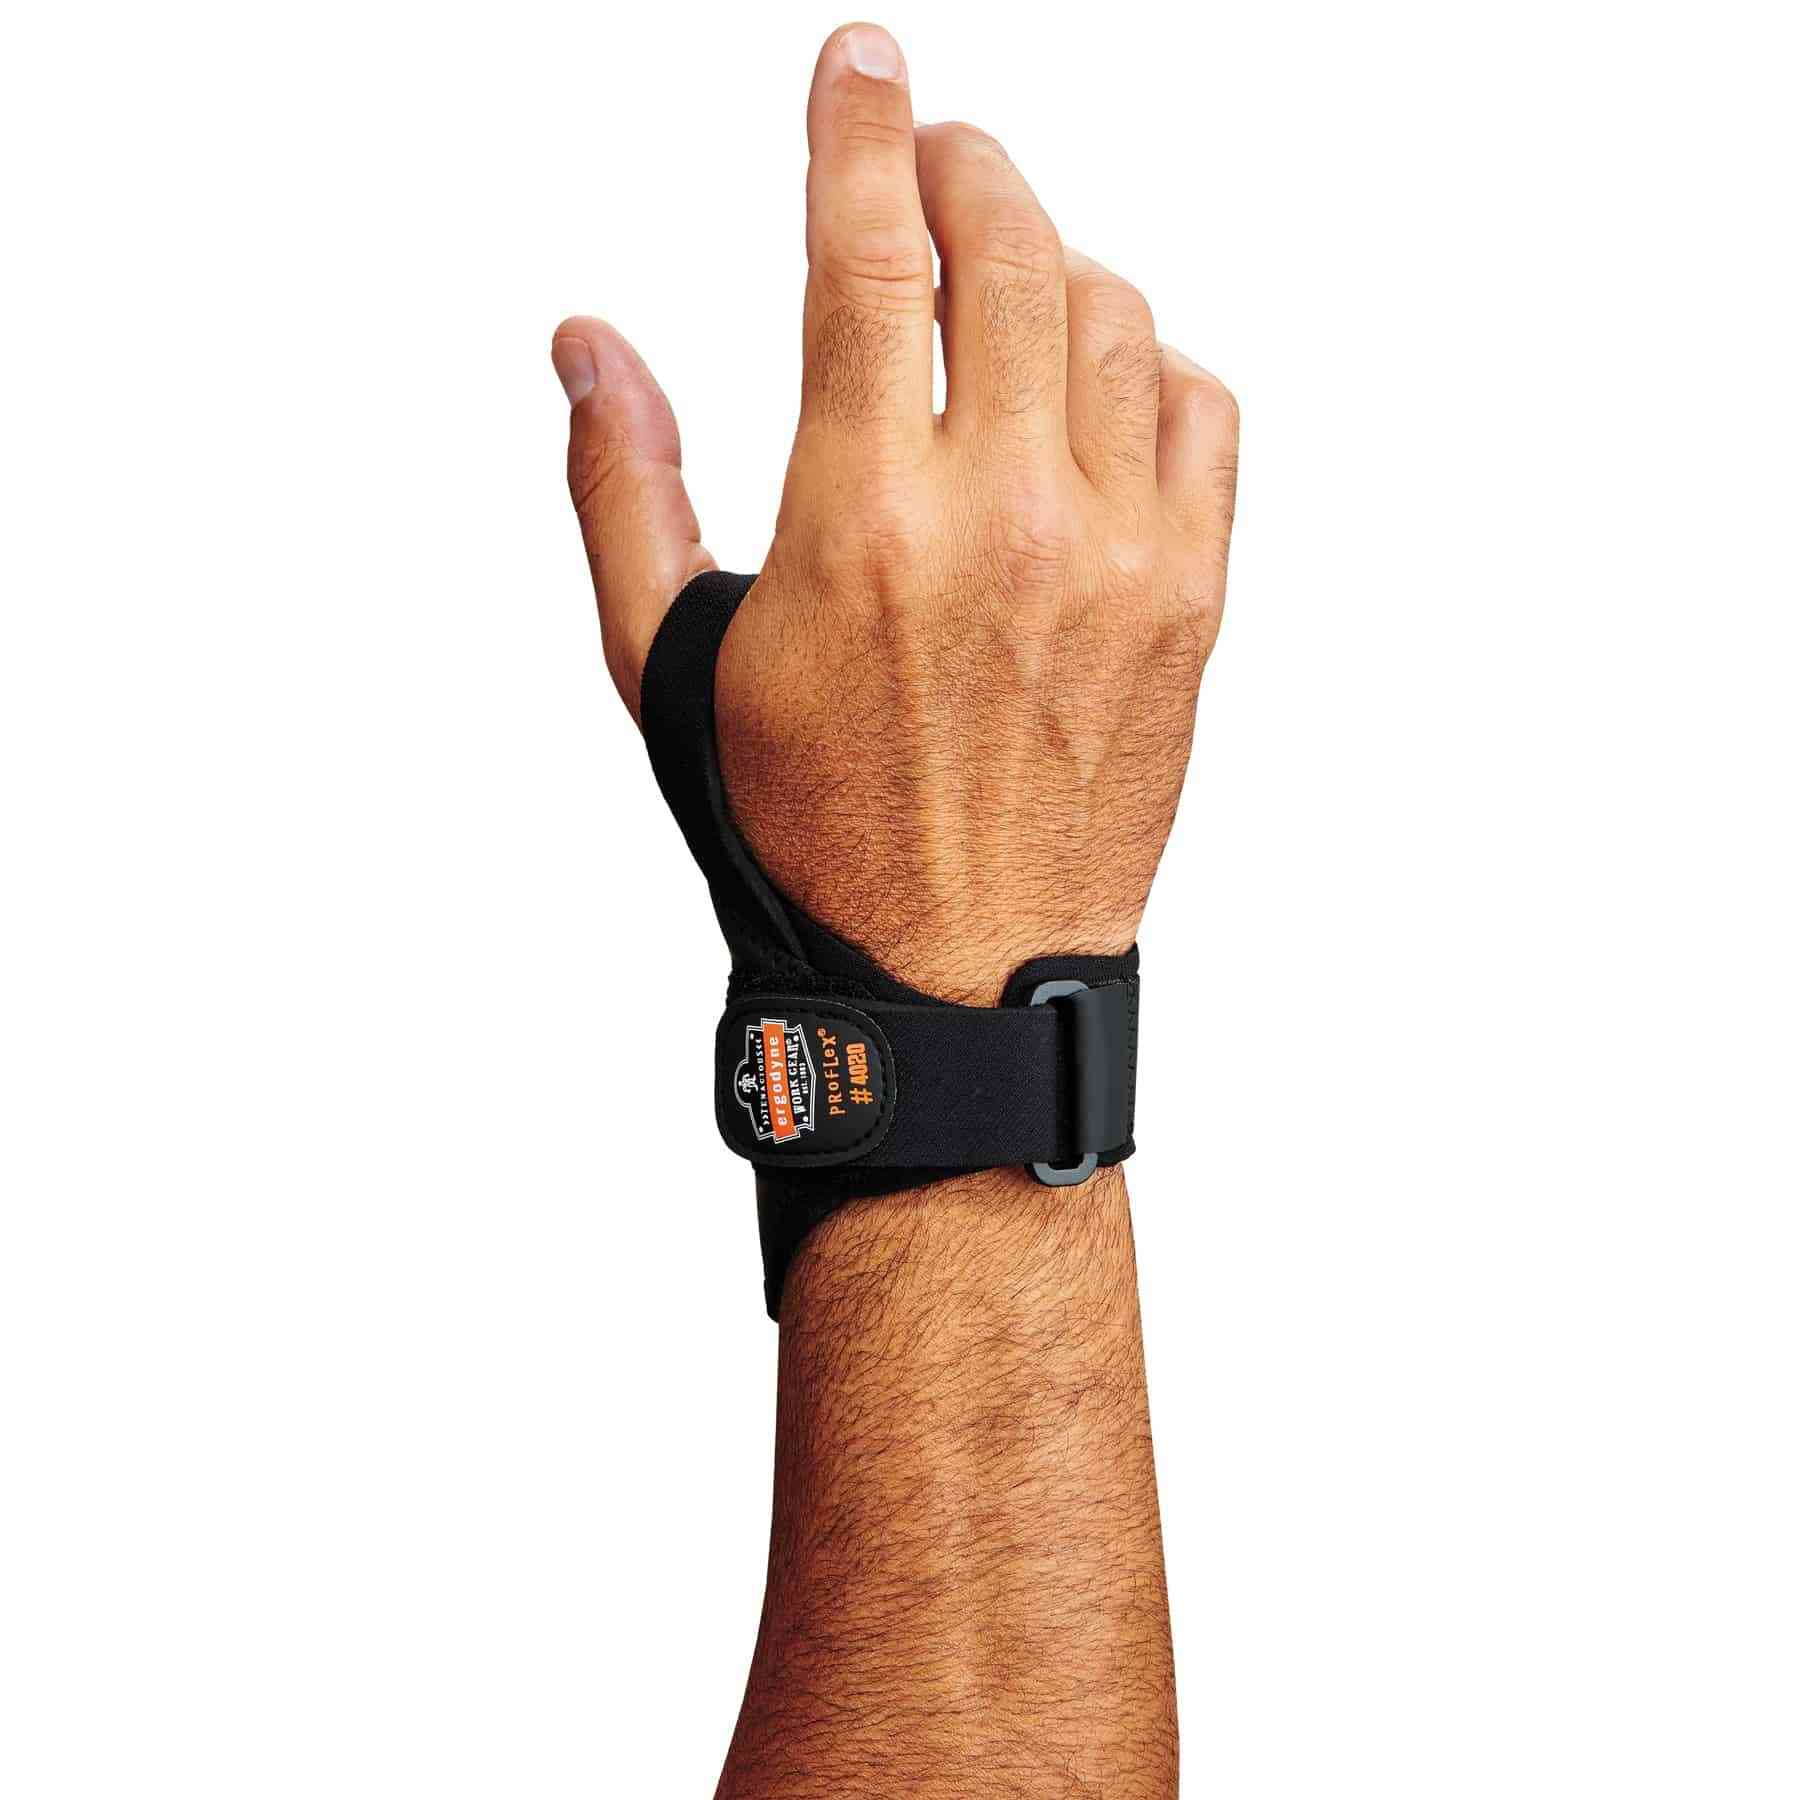 Lightweight Wrist Support